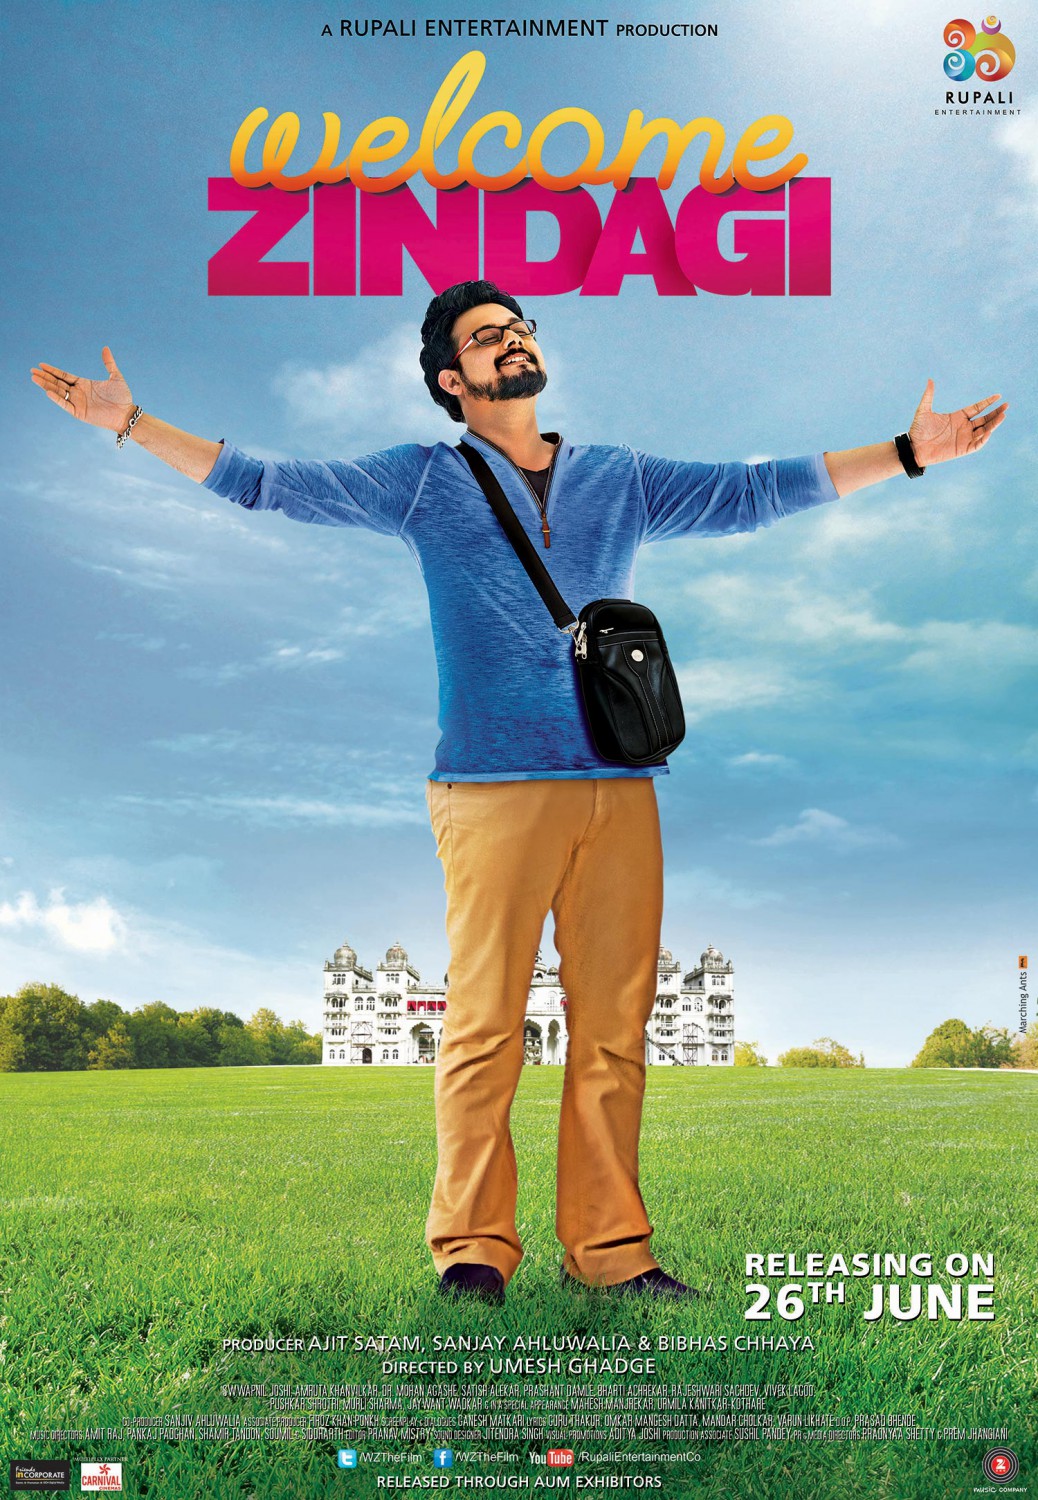 Extra Large Movie Poster Image for Welcome Zindagi (#3 of 4)